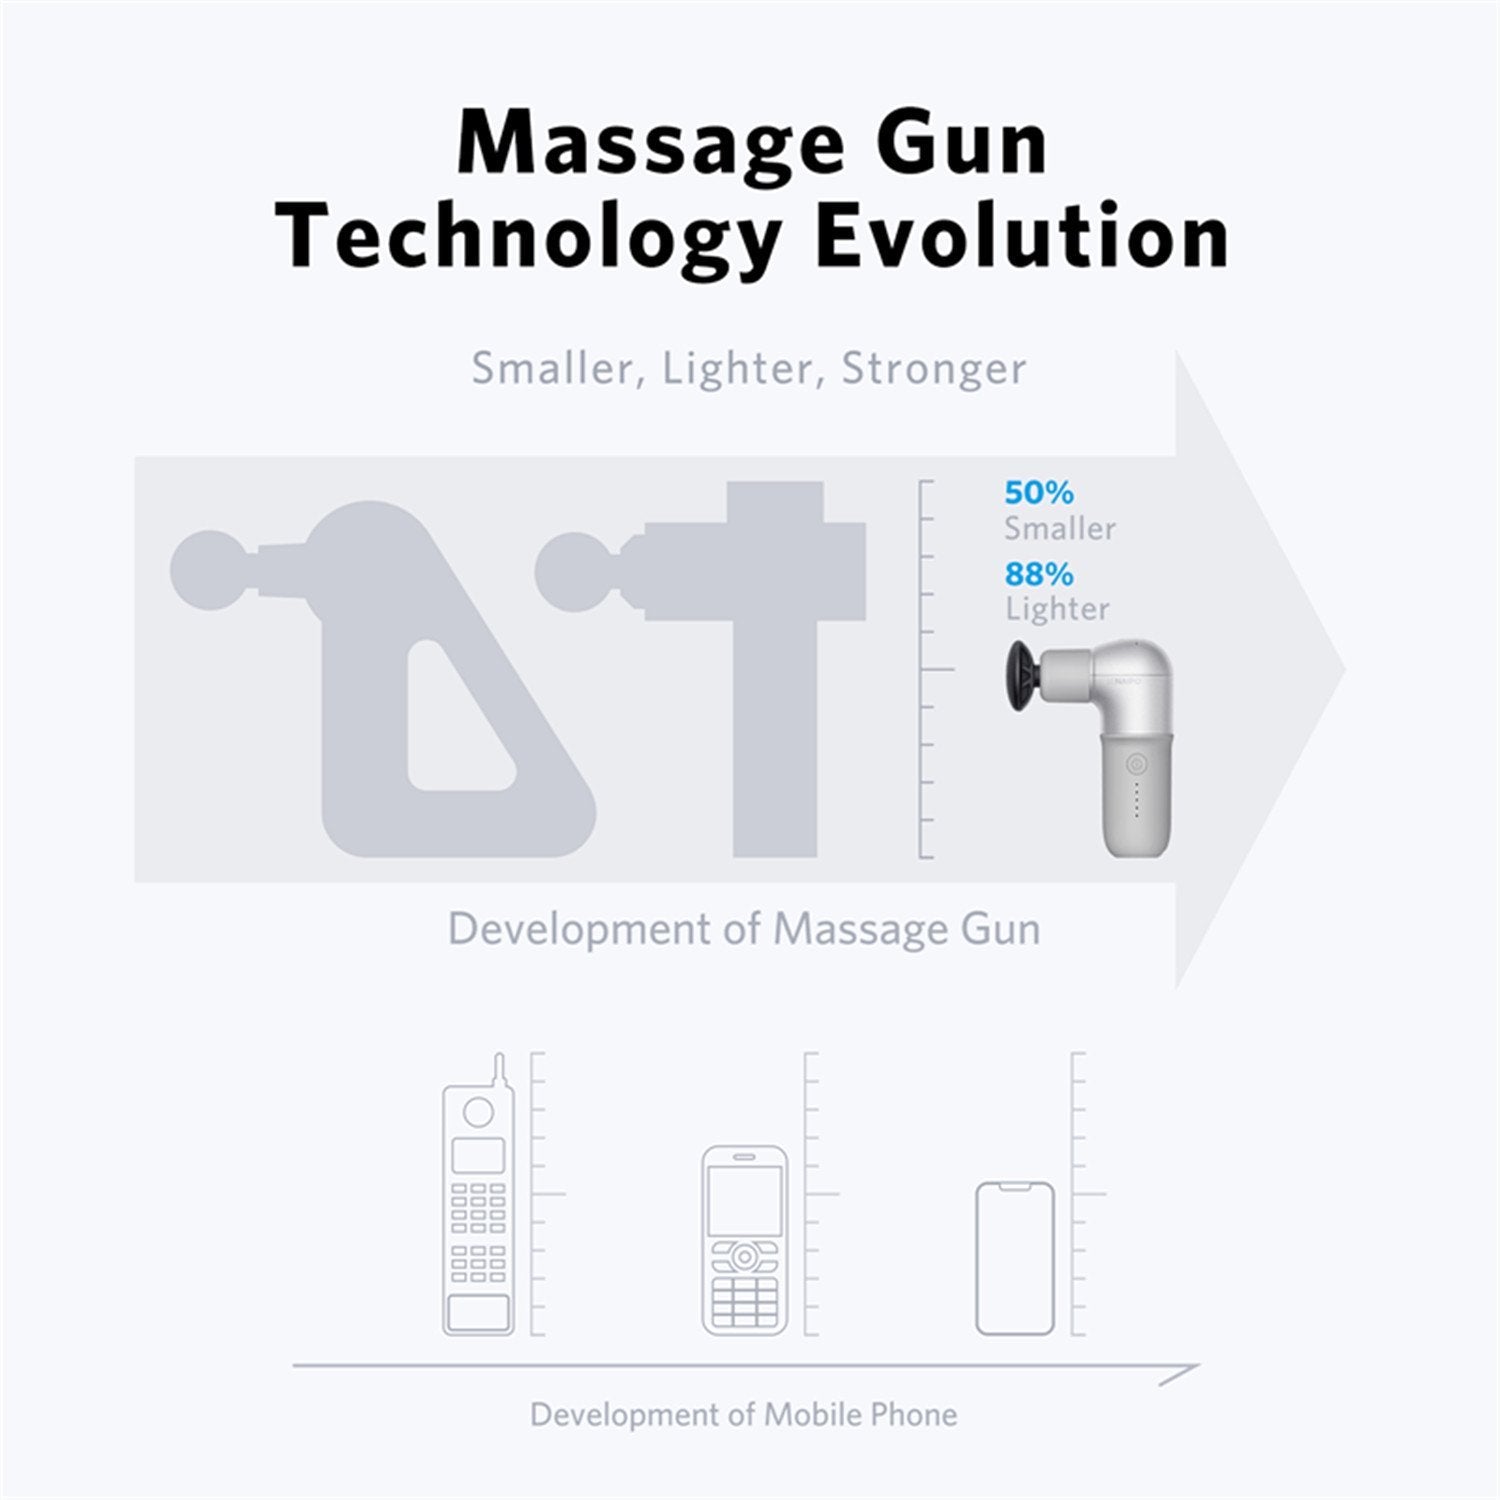 Naipo Mini Massage Gun Deep Tissue Muscle Massager with Ergonomic Handle, USB Charging, Light&Portable, Size: Mini size, Black